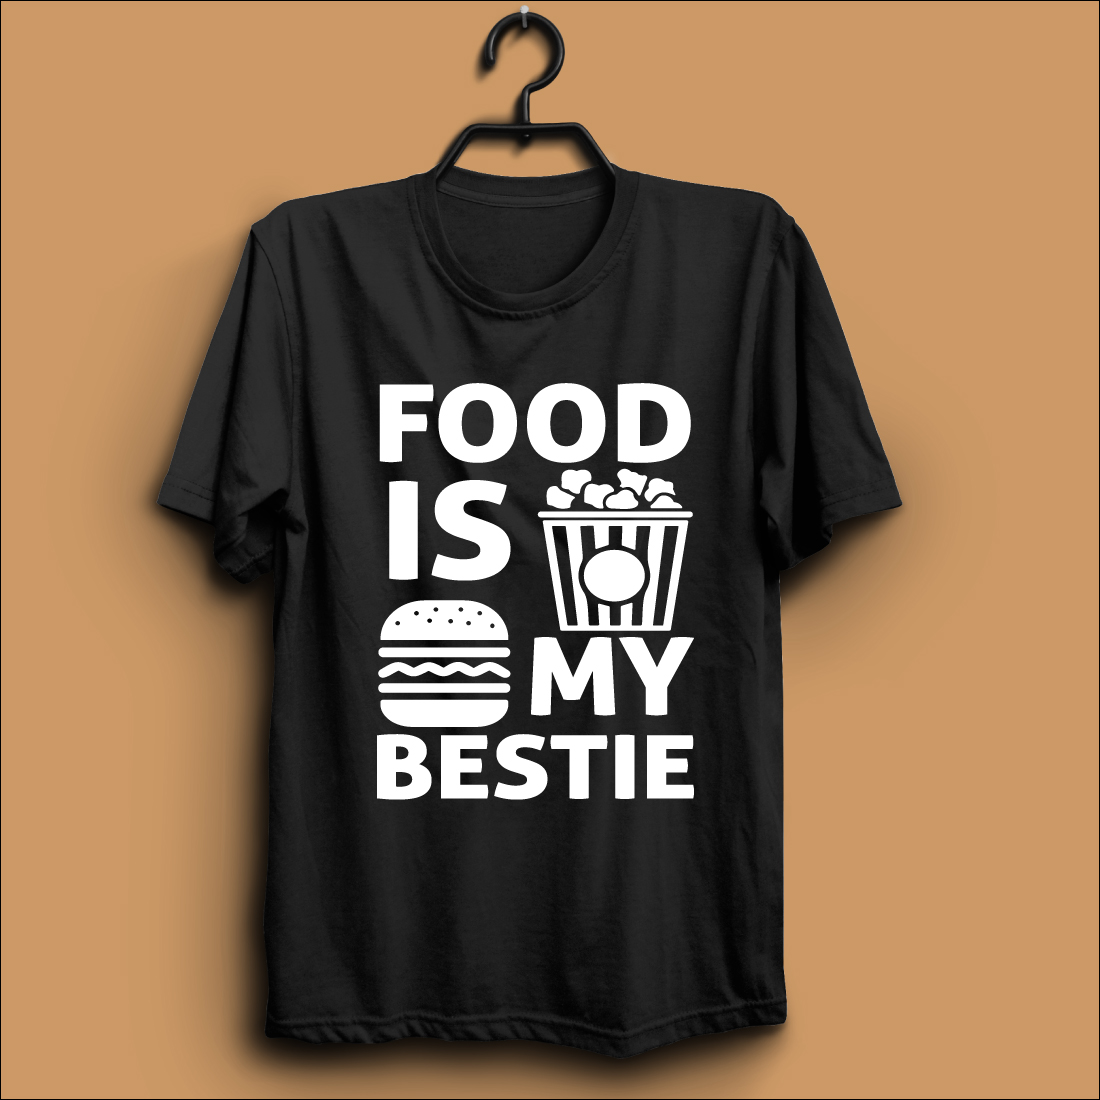 food t shirt design02 986